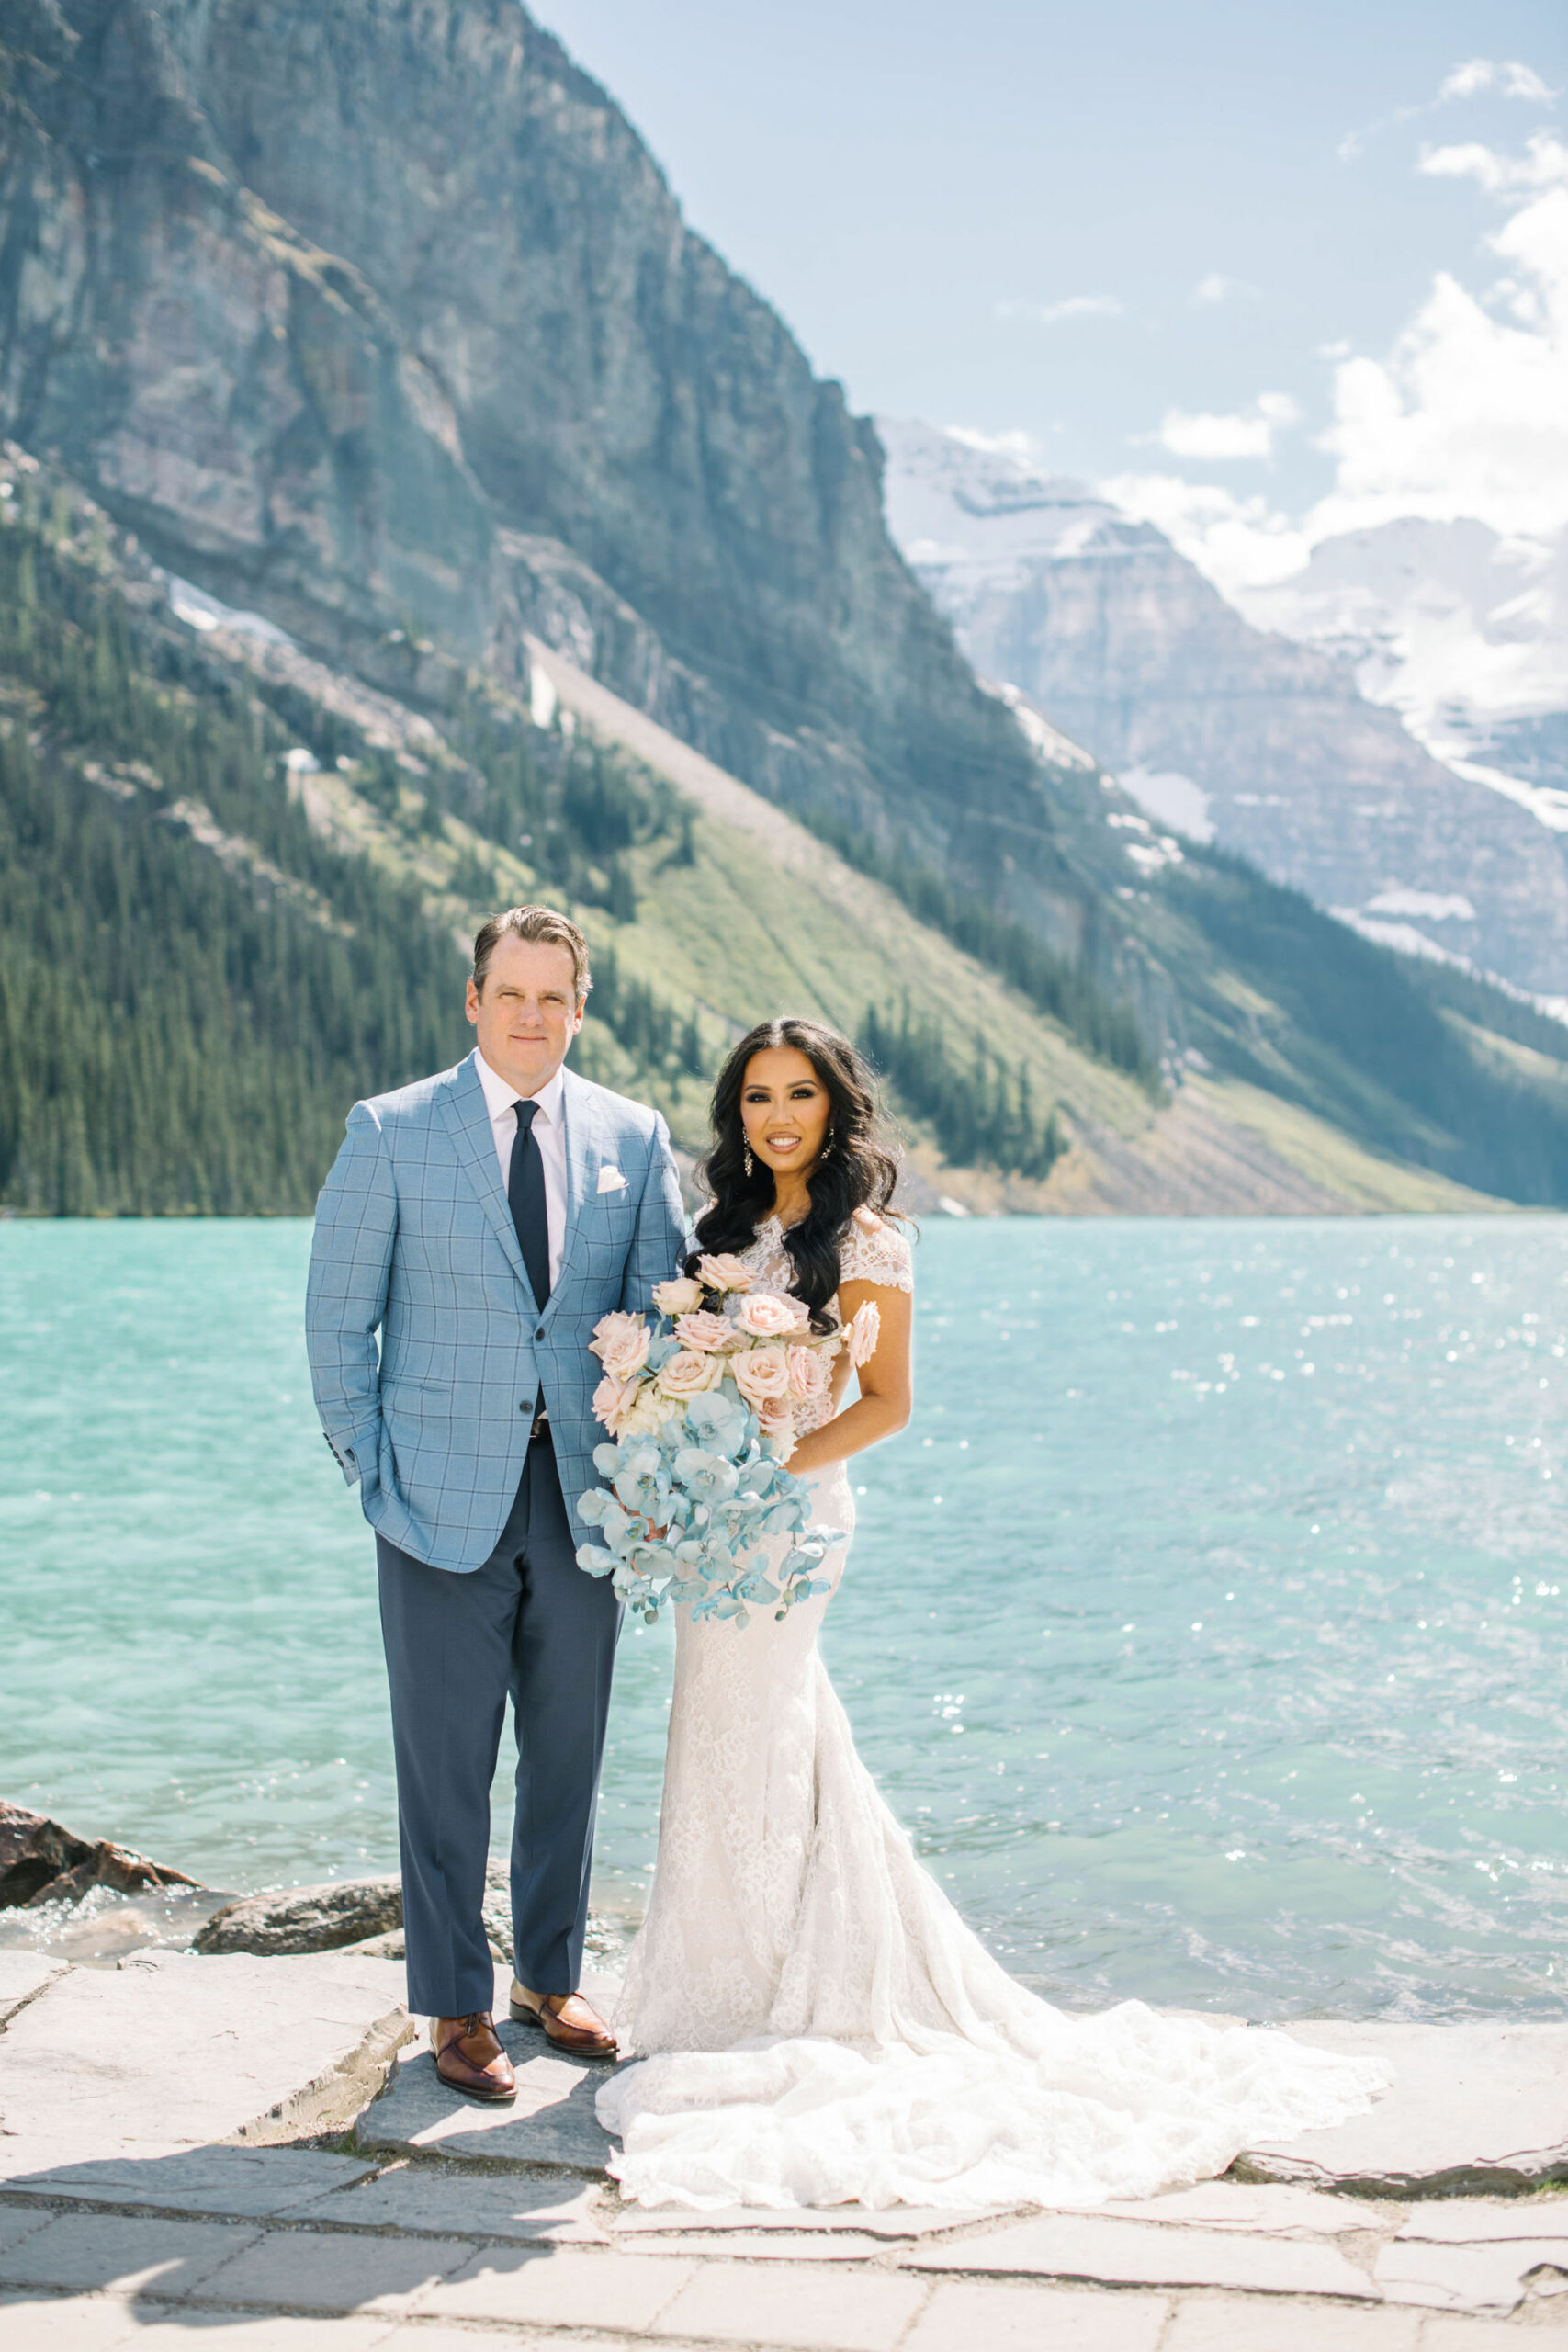 Lauren + Jordan, Calgary • Julianne Young Weddings